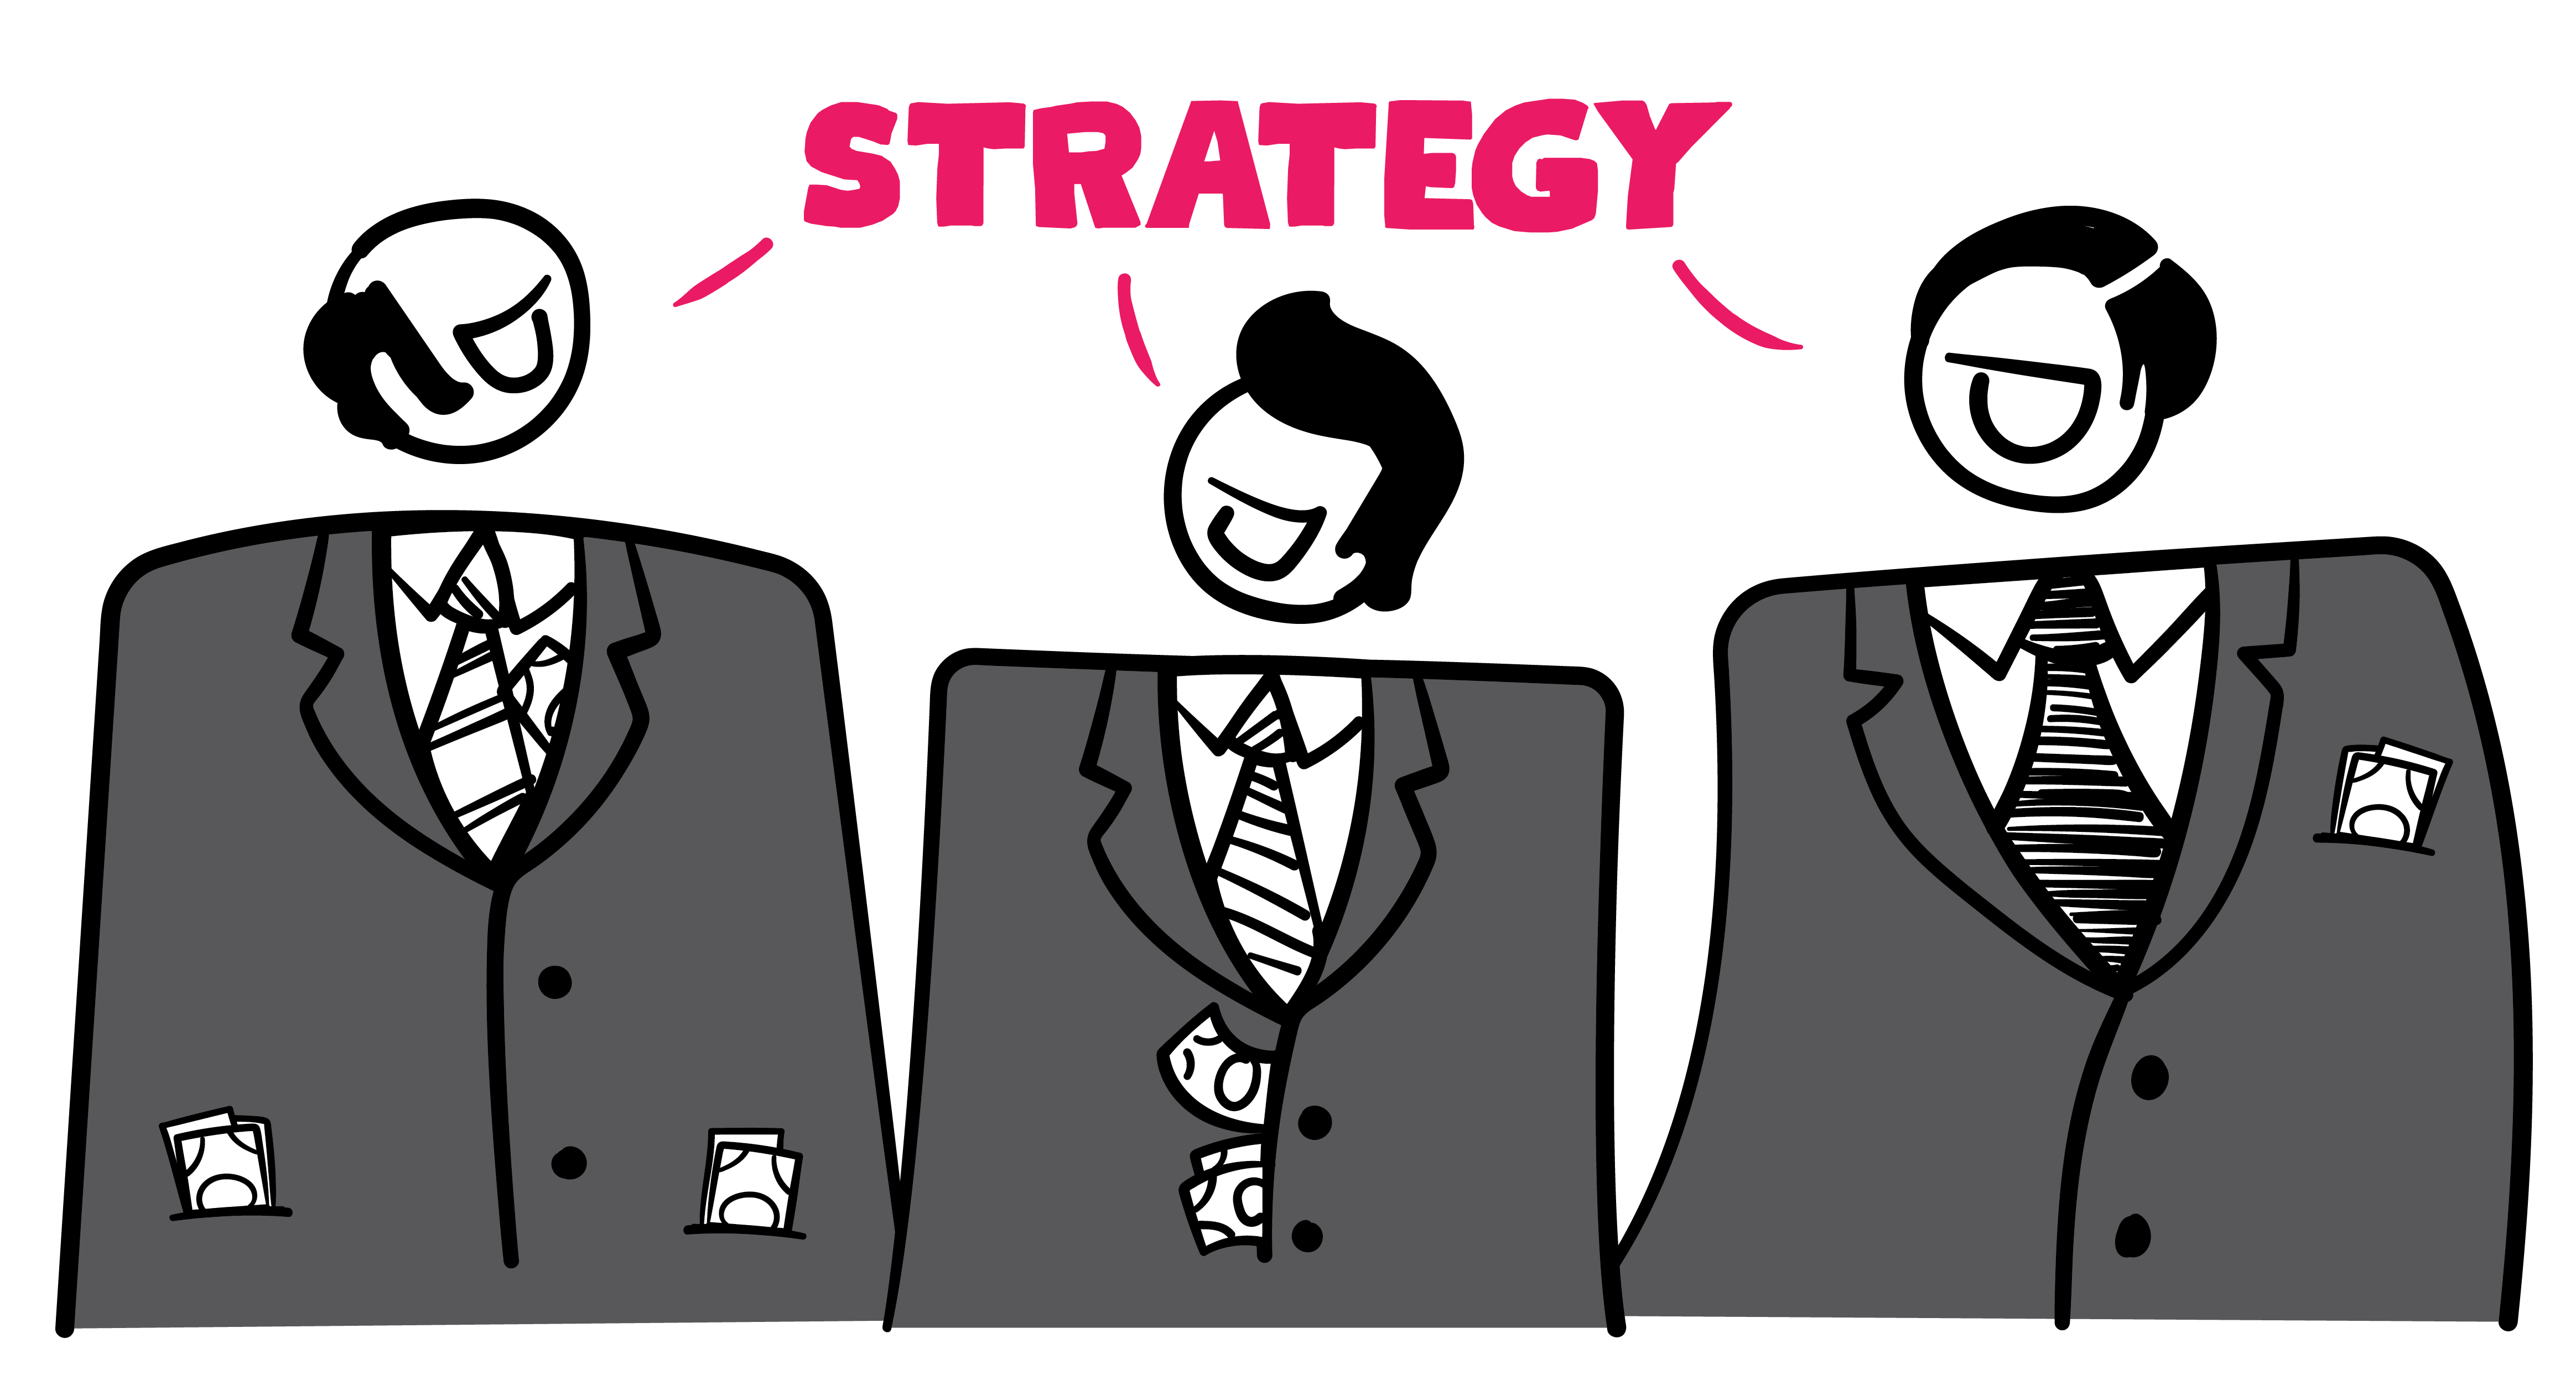 Strategy-02-NotStrategy